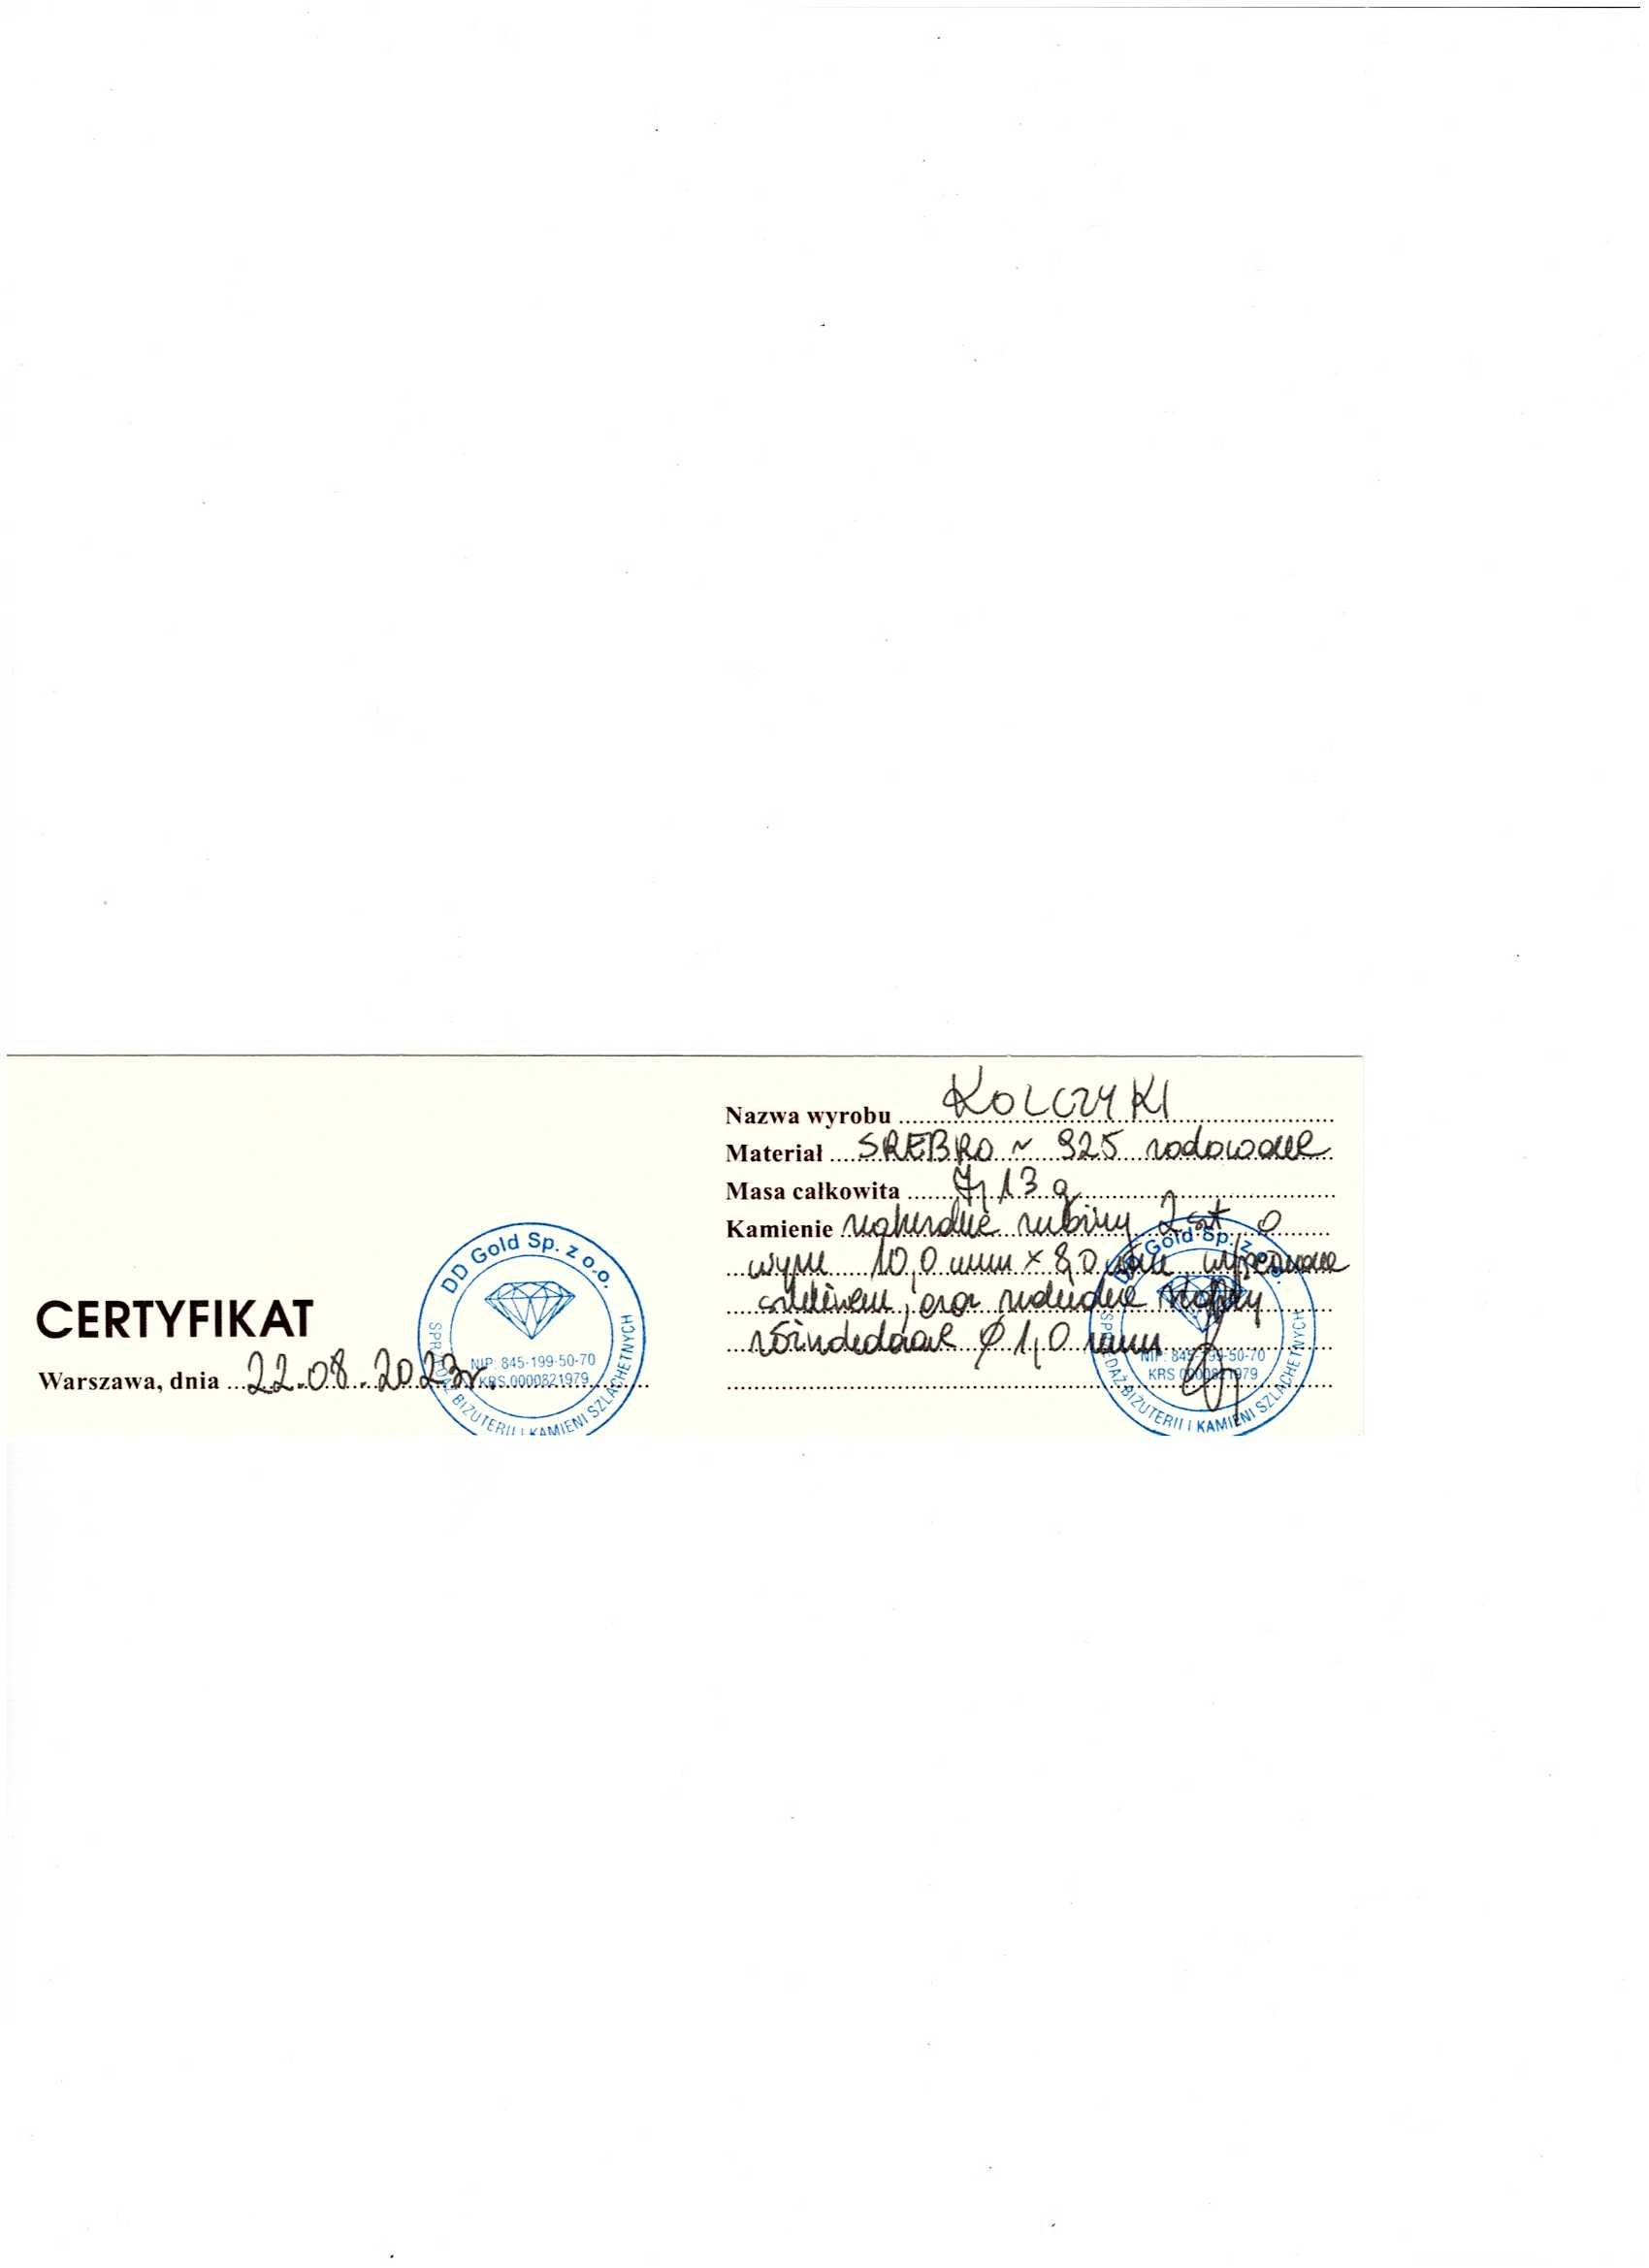 kolczyki srebro 925 rubiny szafiry certyfikat